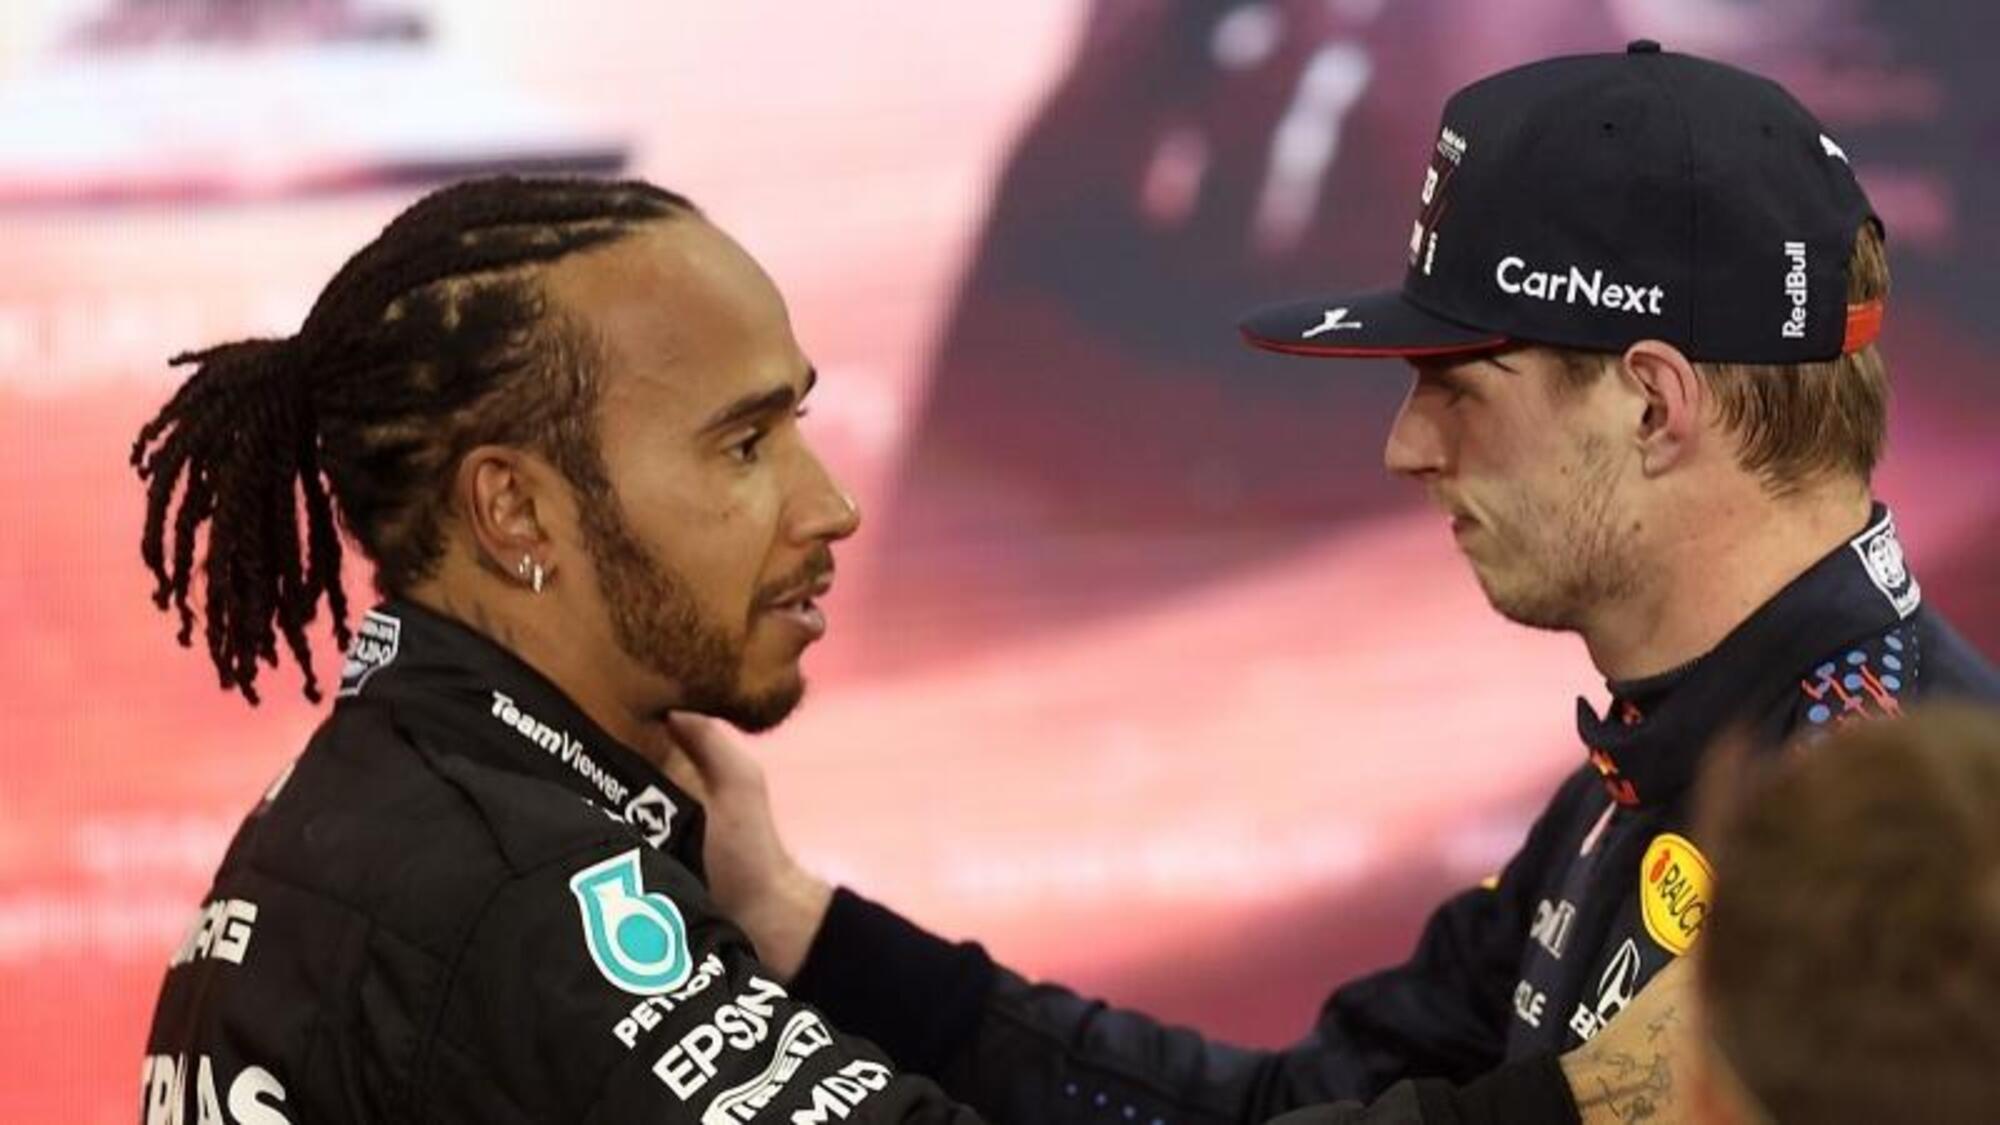 Max Verstappen e Lewis Hamilton